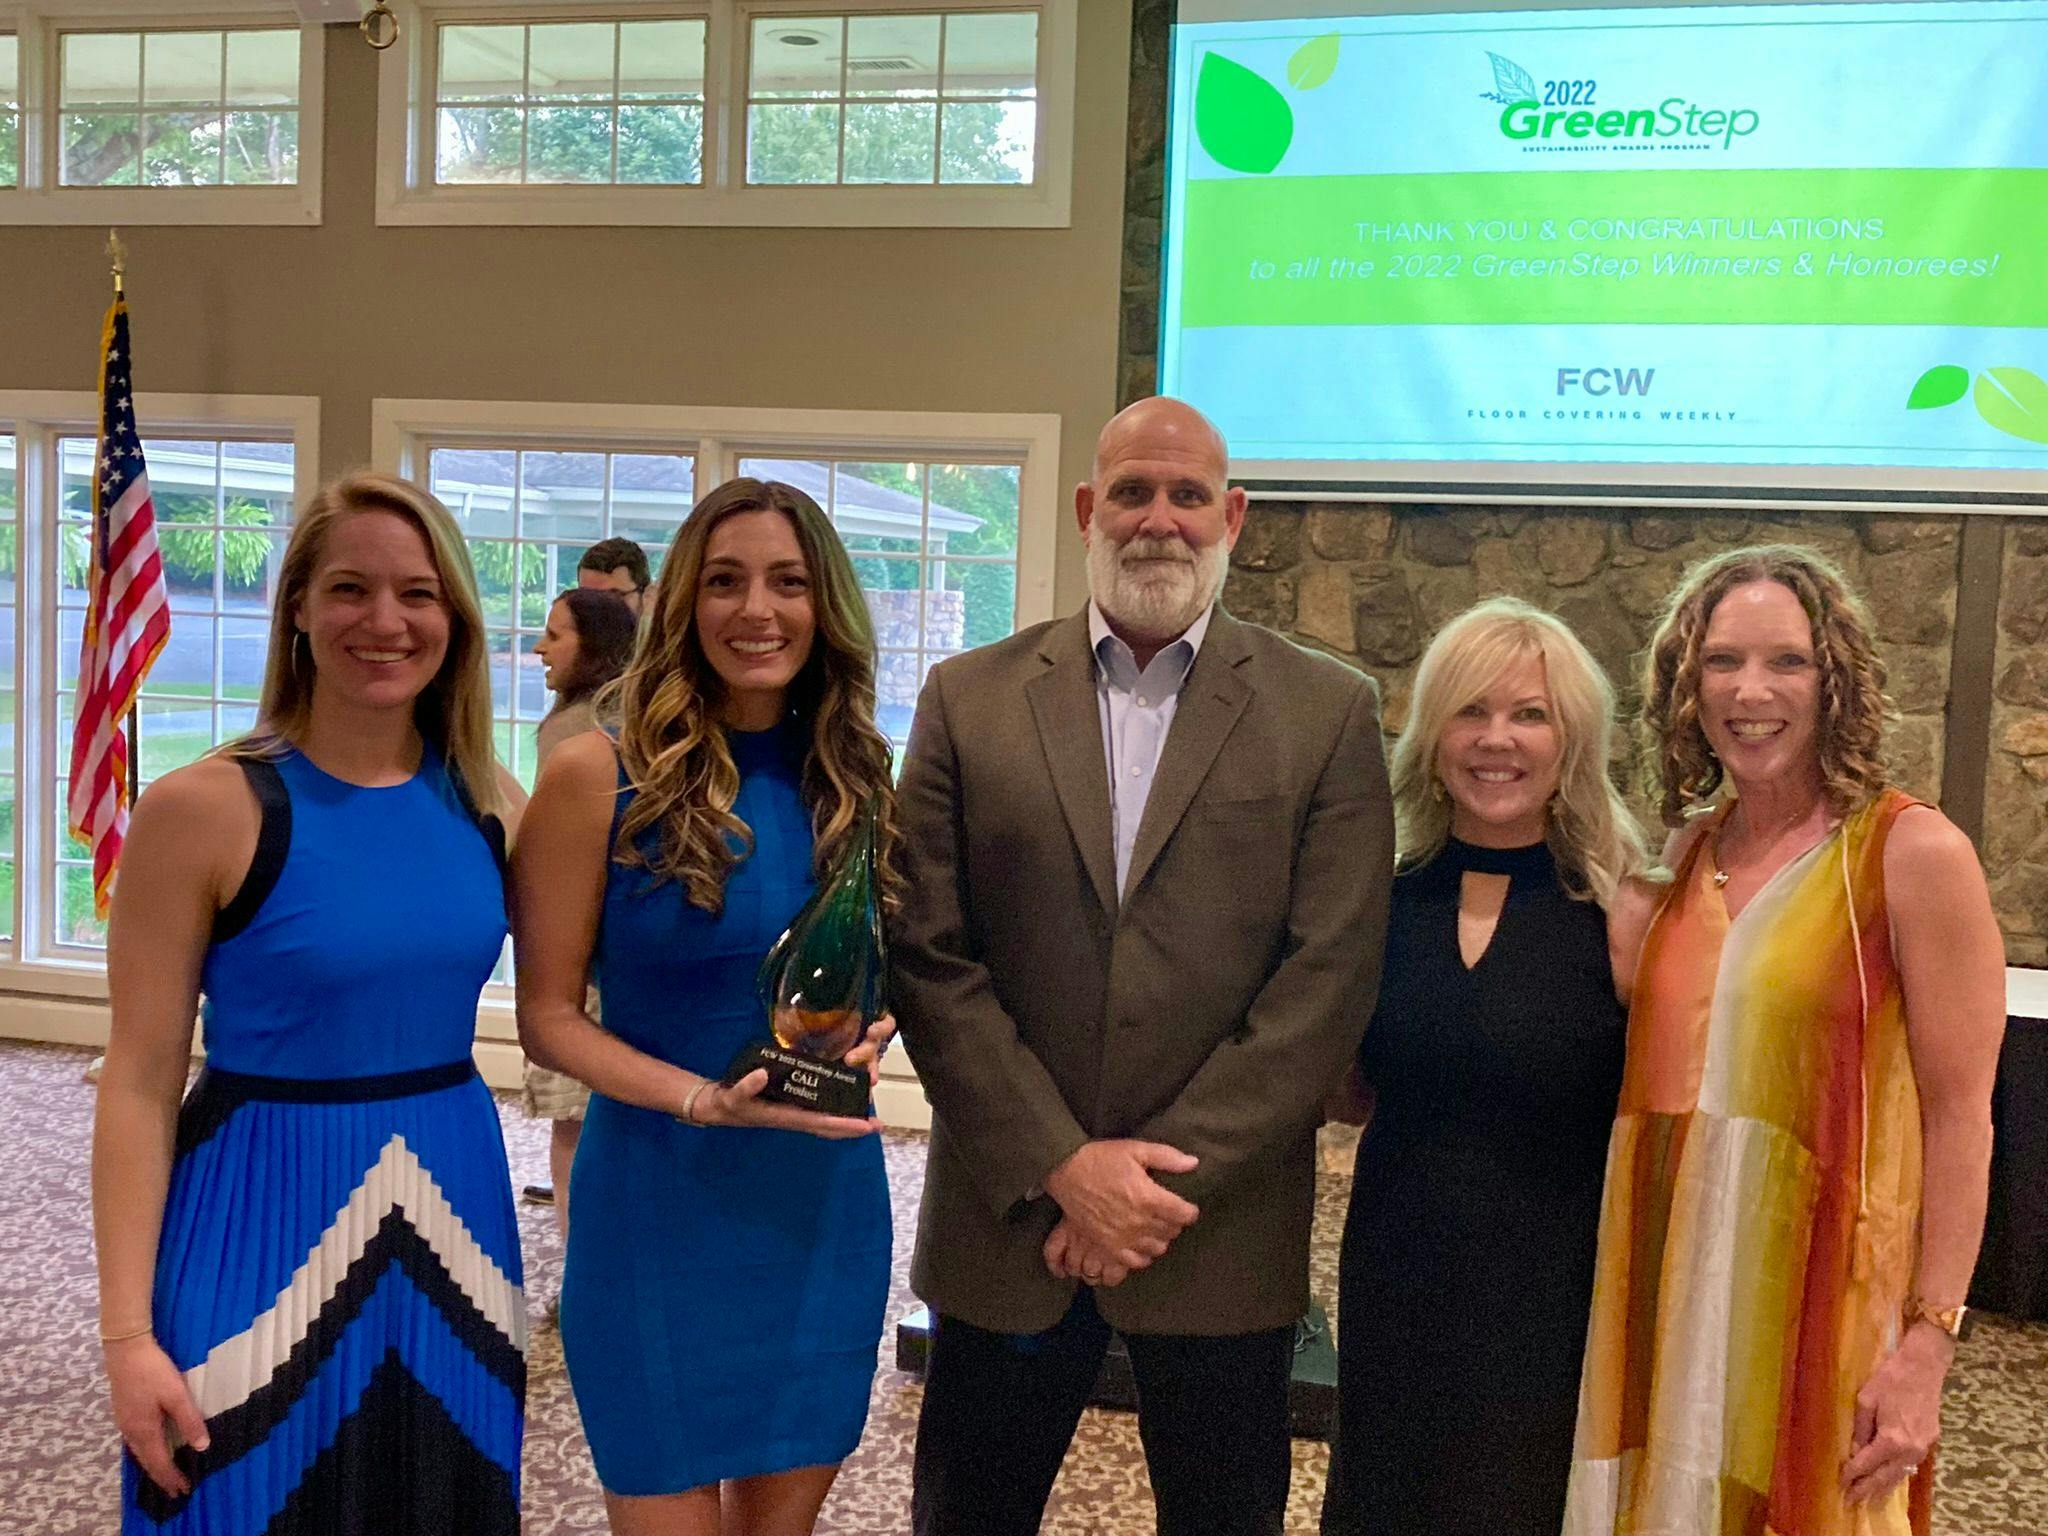 CALI Wins GreenStep Sustainability Award